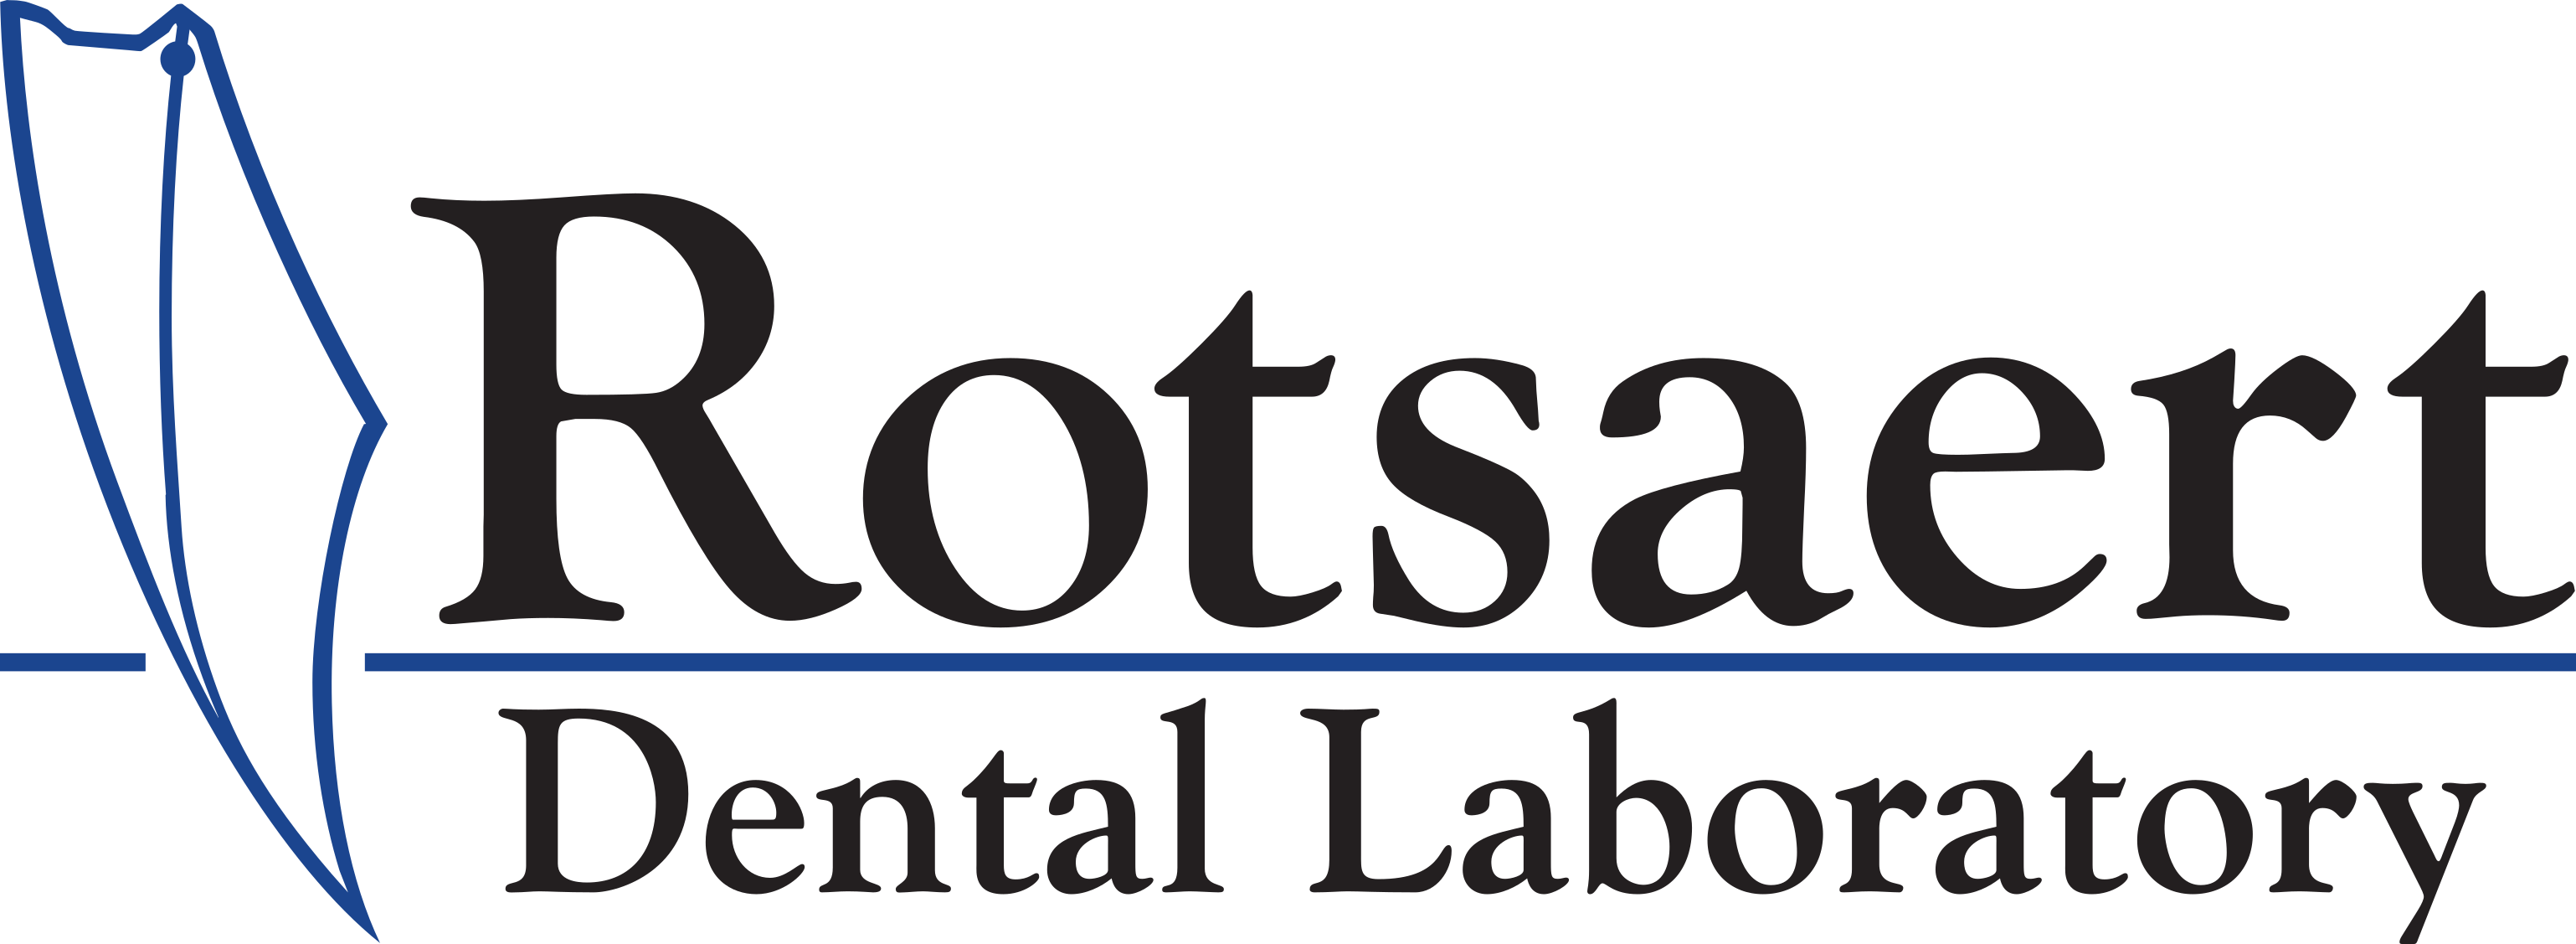 Rotsaert Logo Main